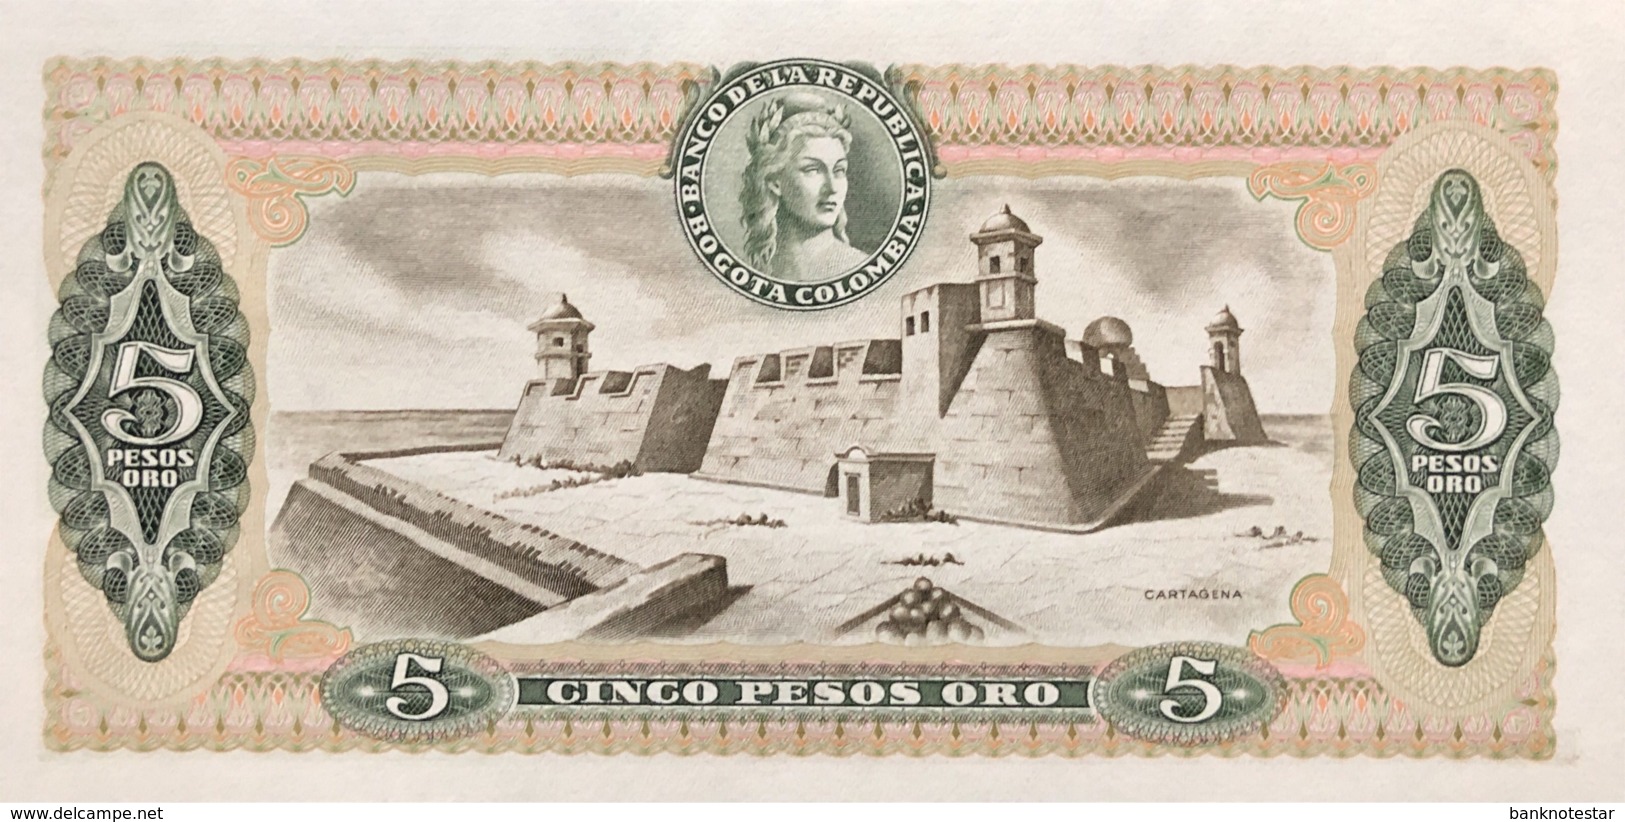 Colombia 5 Pesos Oro, P-406f (1.1.1980) - UNC - Kolumbien